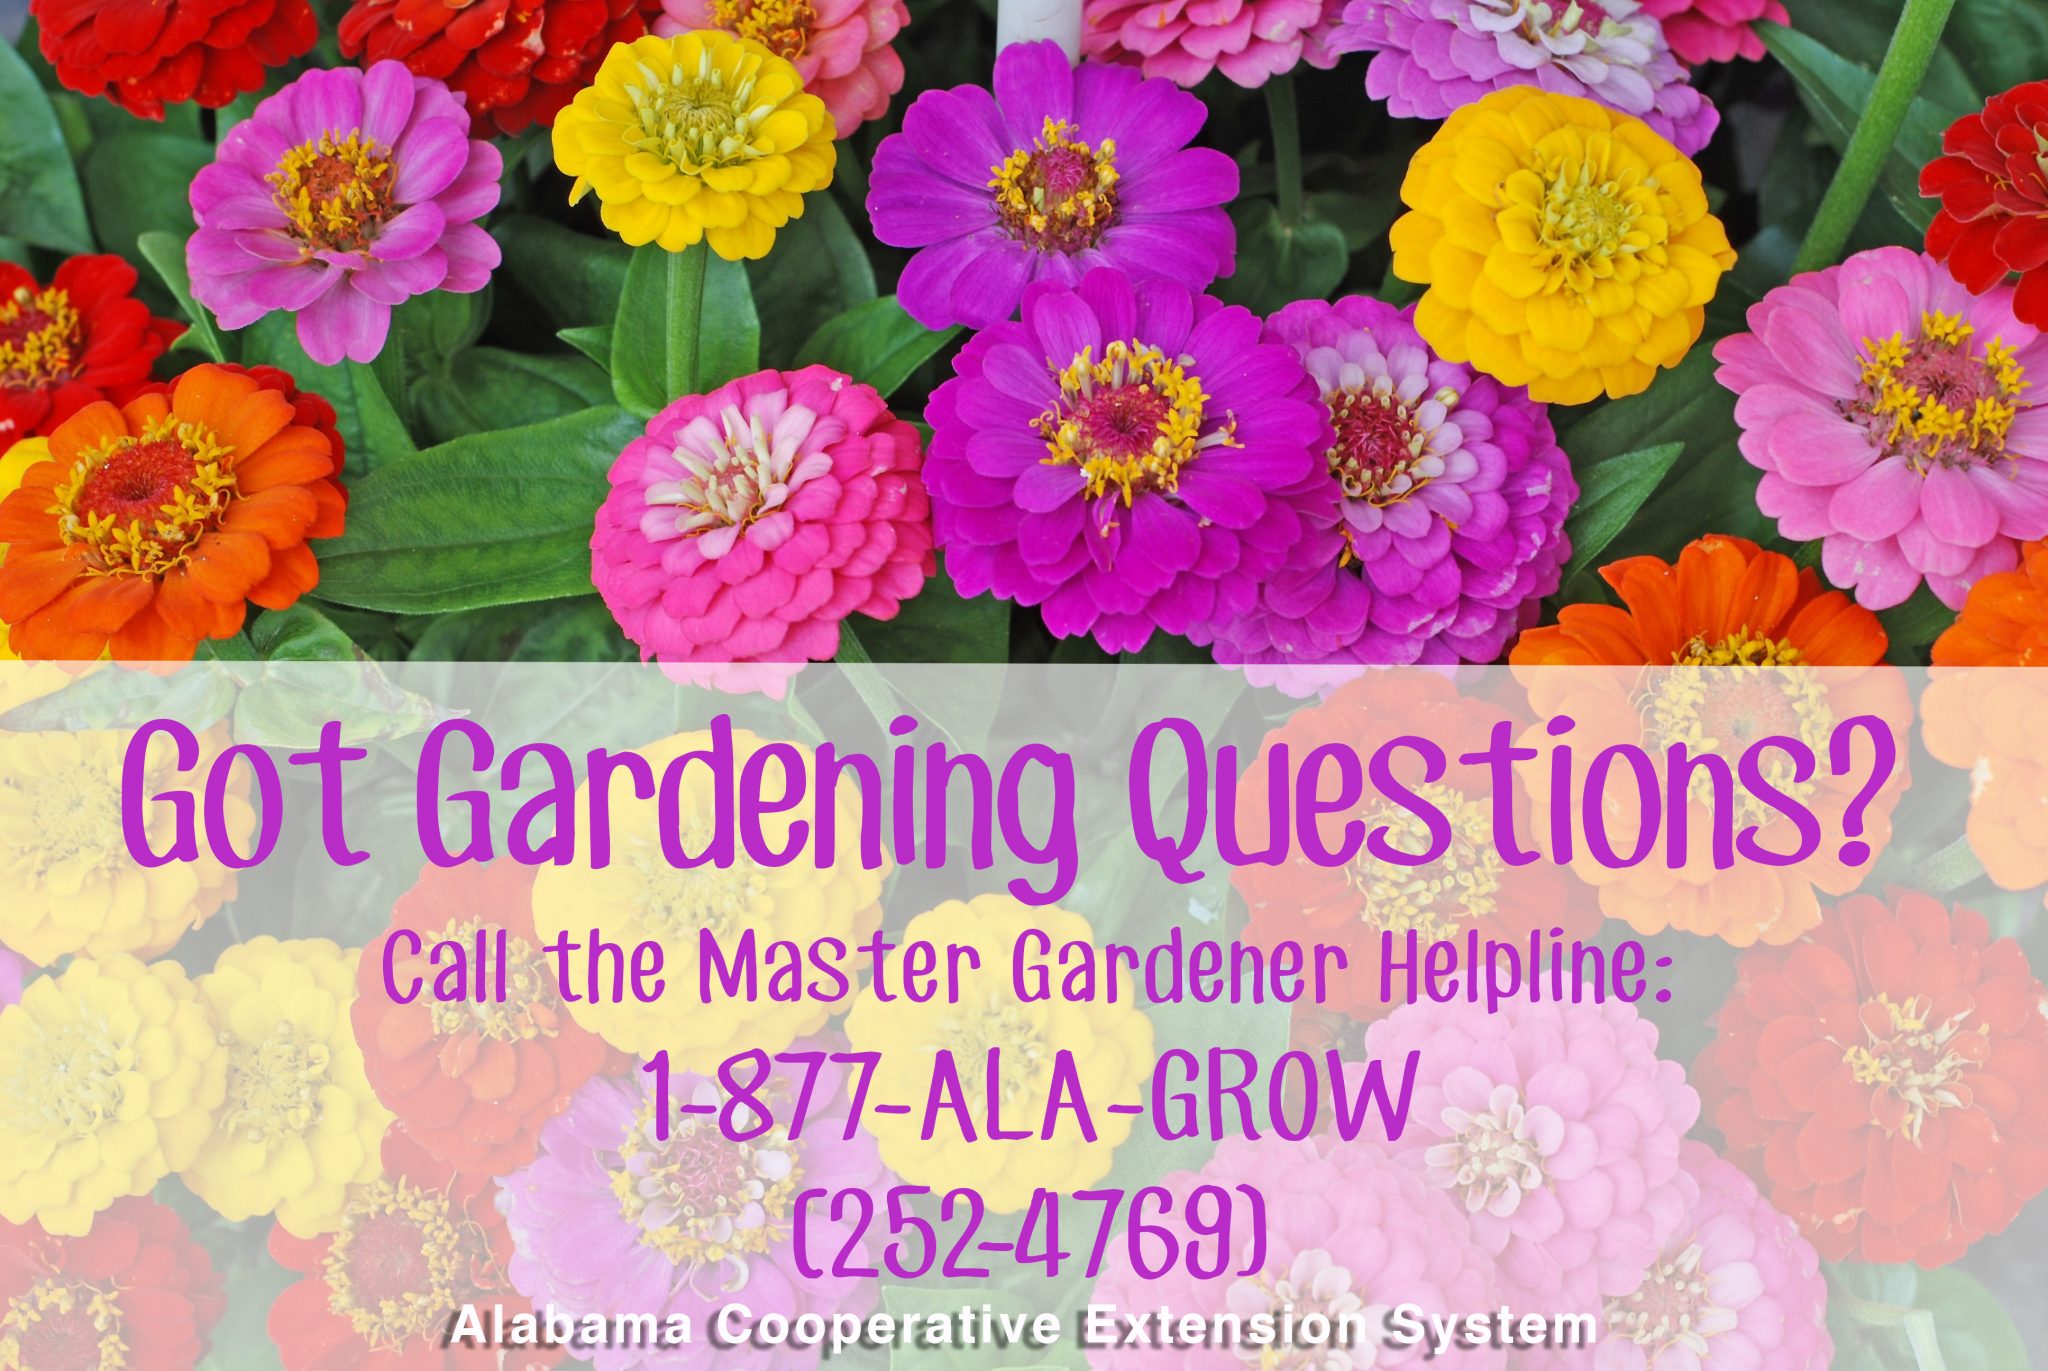 Got Gardening Questions? Call the Master Gardener Helpline 1-877-ALA-GROW (252-4769)